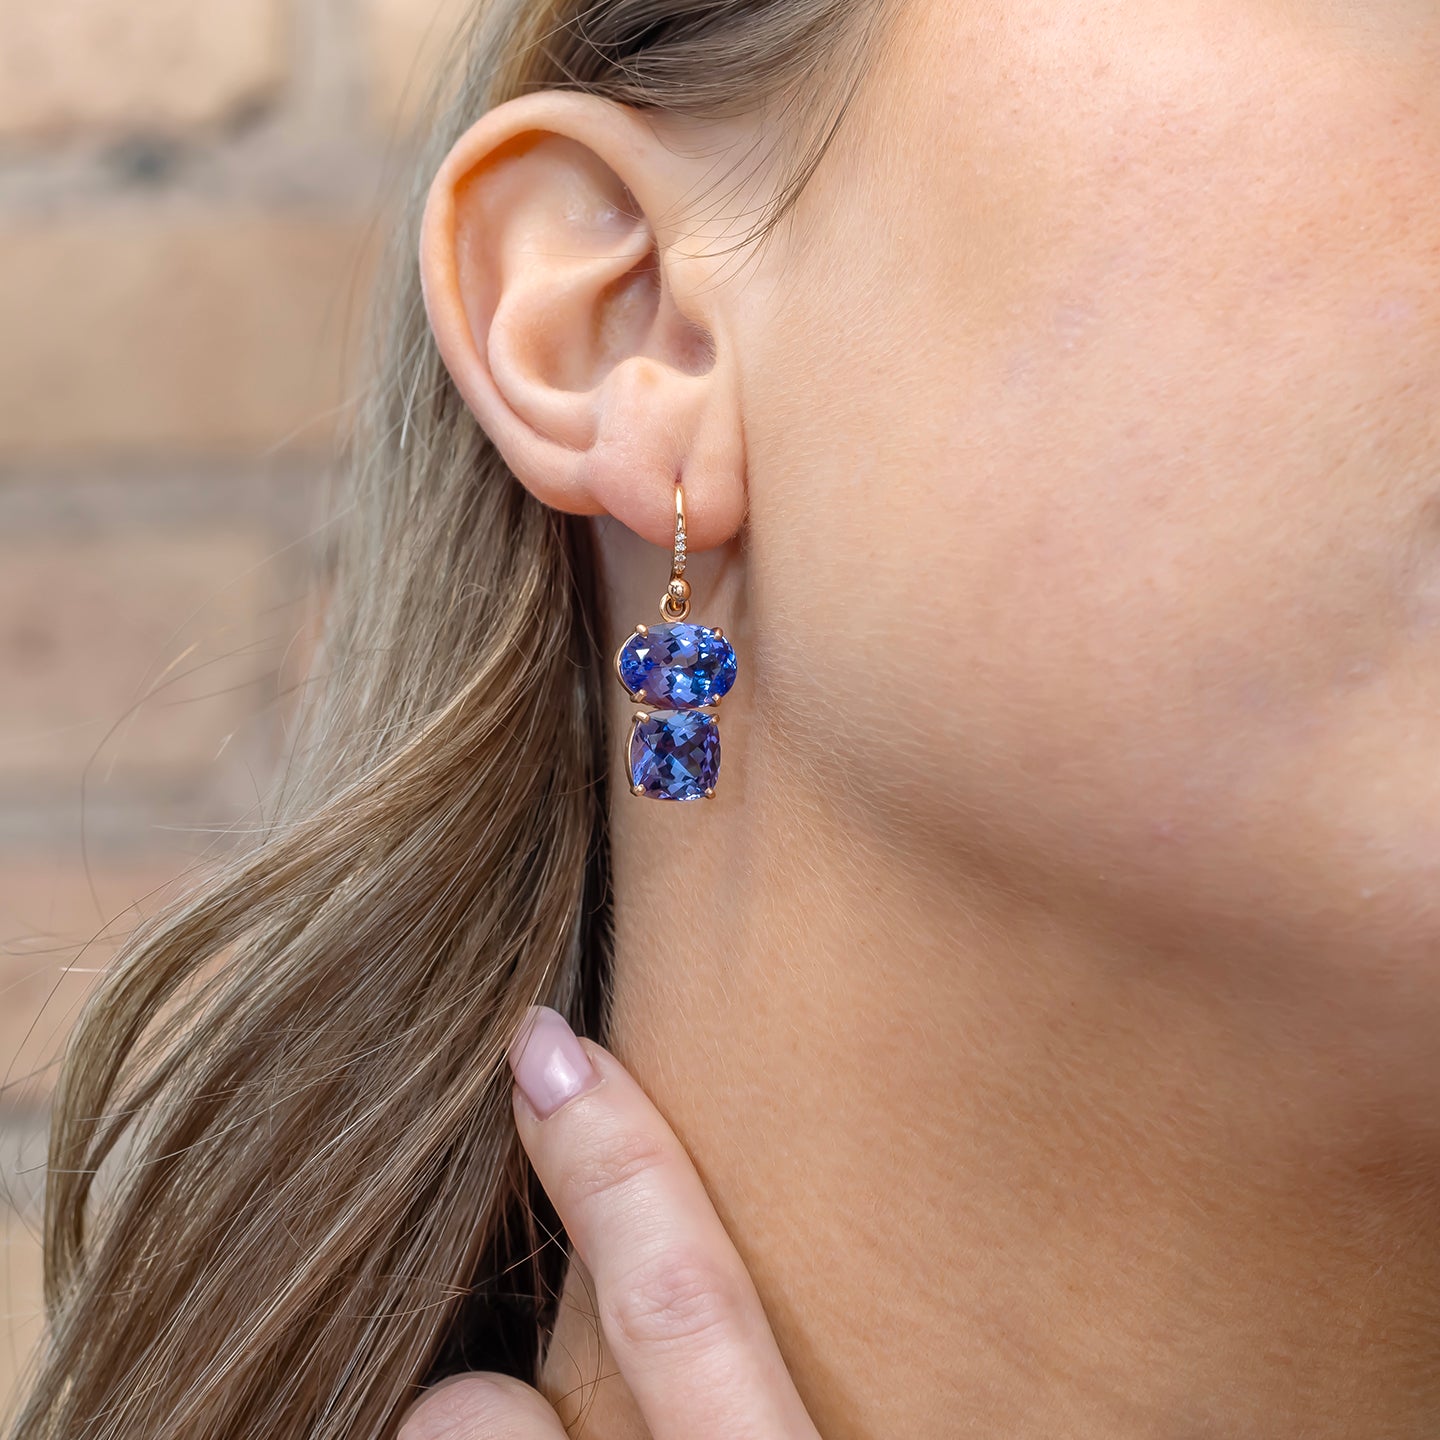 Irene Neuwirth 'Gemmy Gem' One-Of-A-Kind Tanzanite Double Stone Earrings